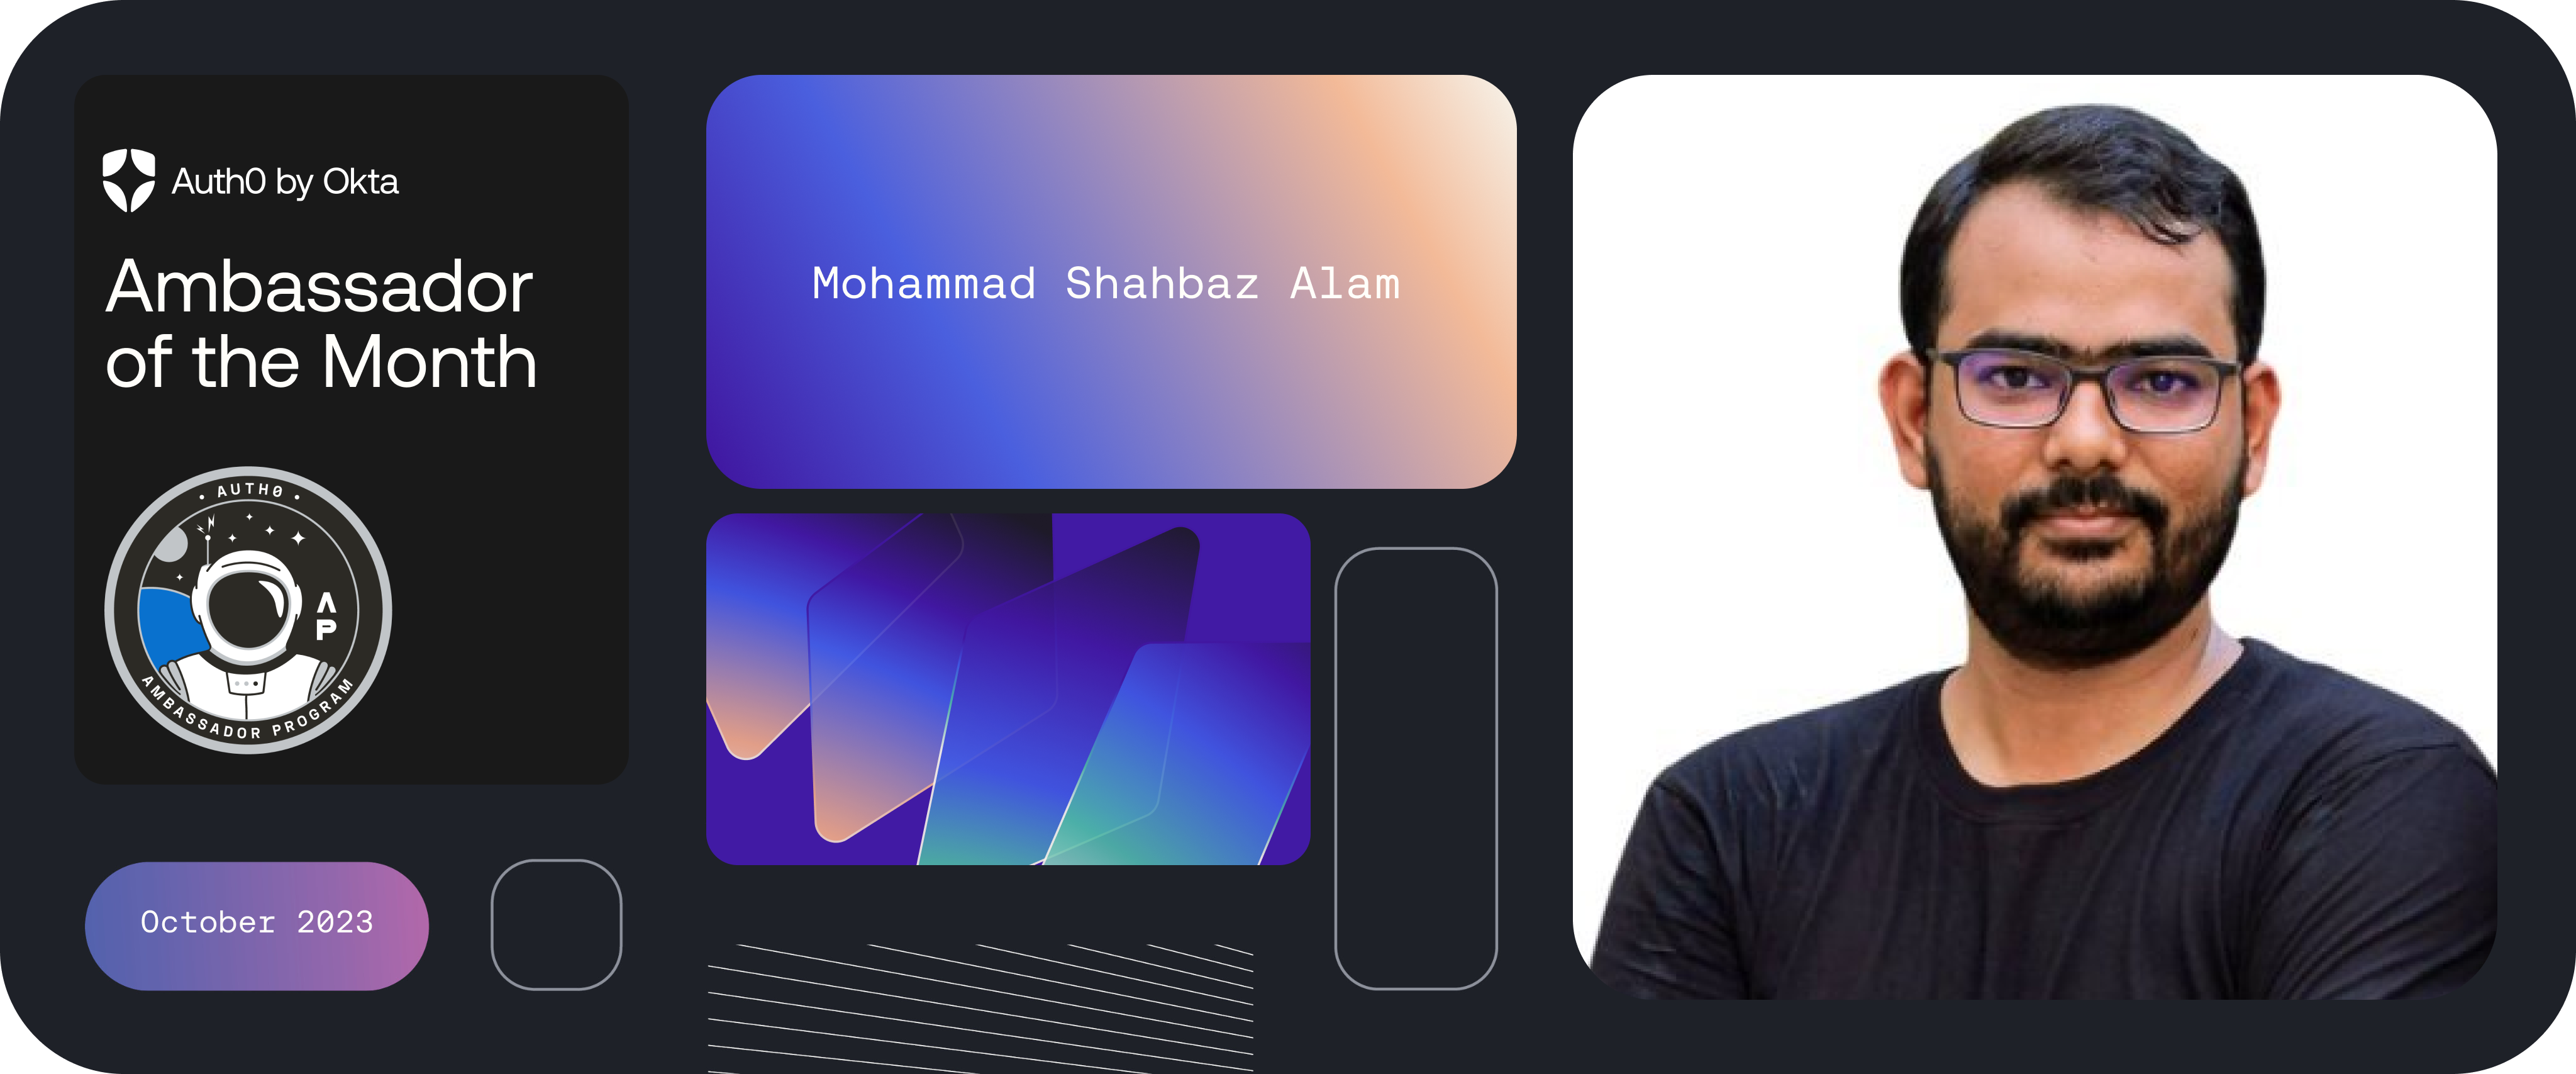 Mohammad Shahbaz Alam